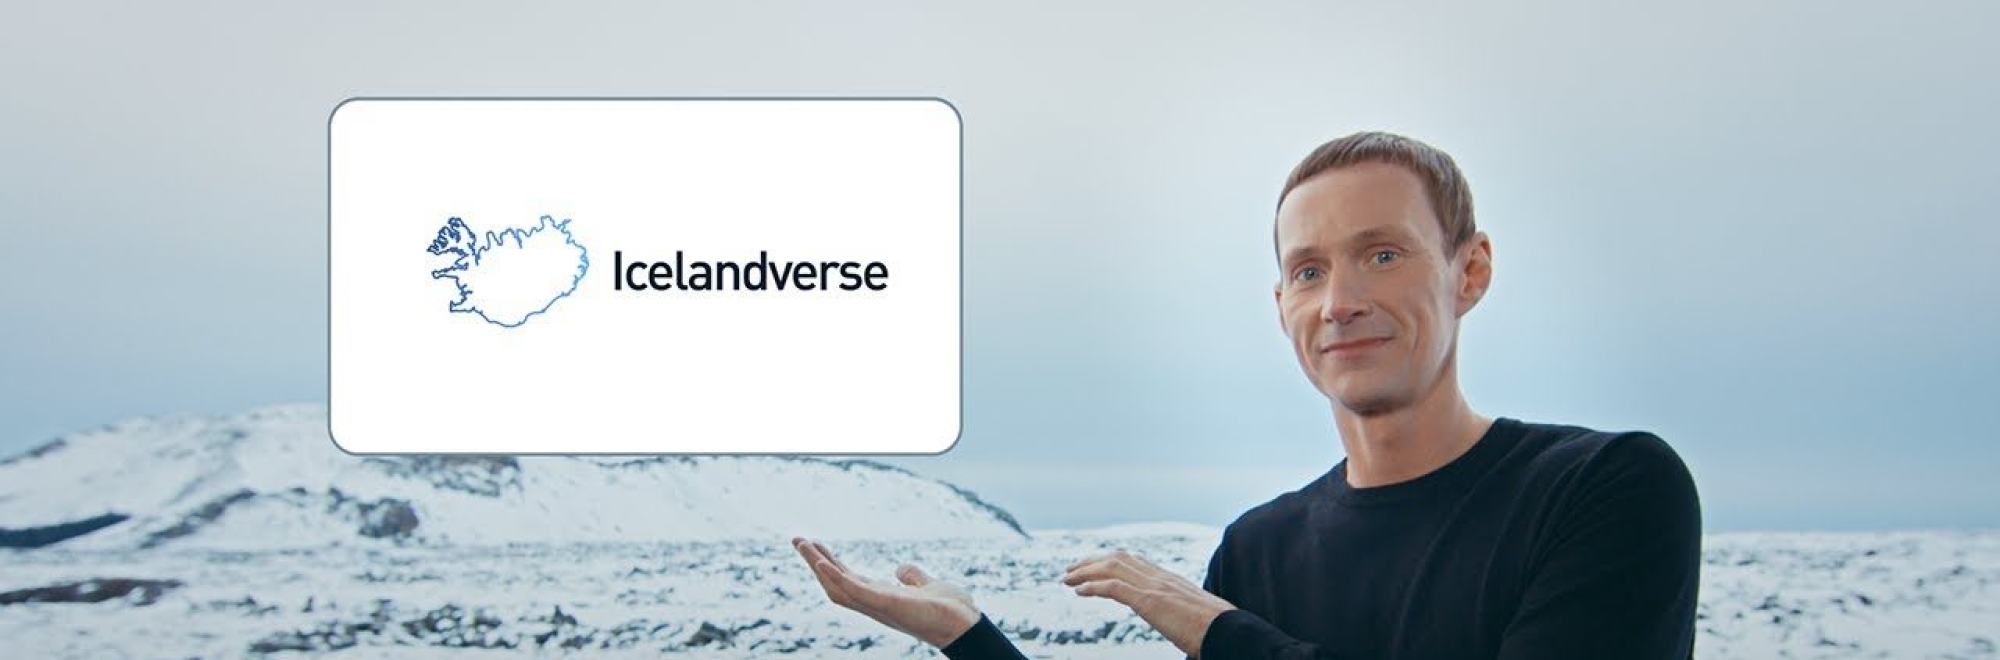 Icelandverse: Tourism body 'Inspired by Iceland' channels Mark Zuckerberg's Meta launch in satirical pastiche